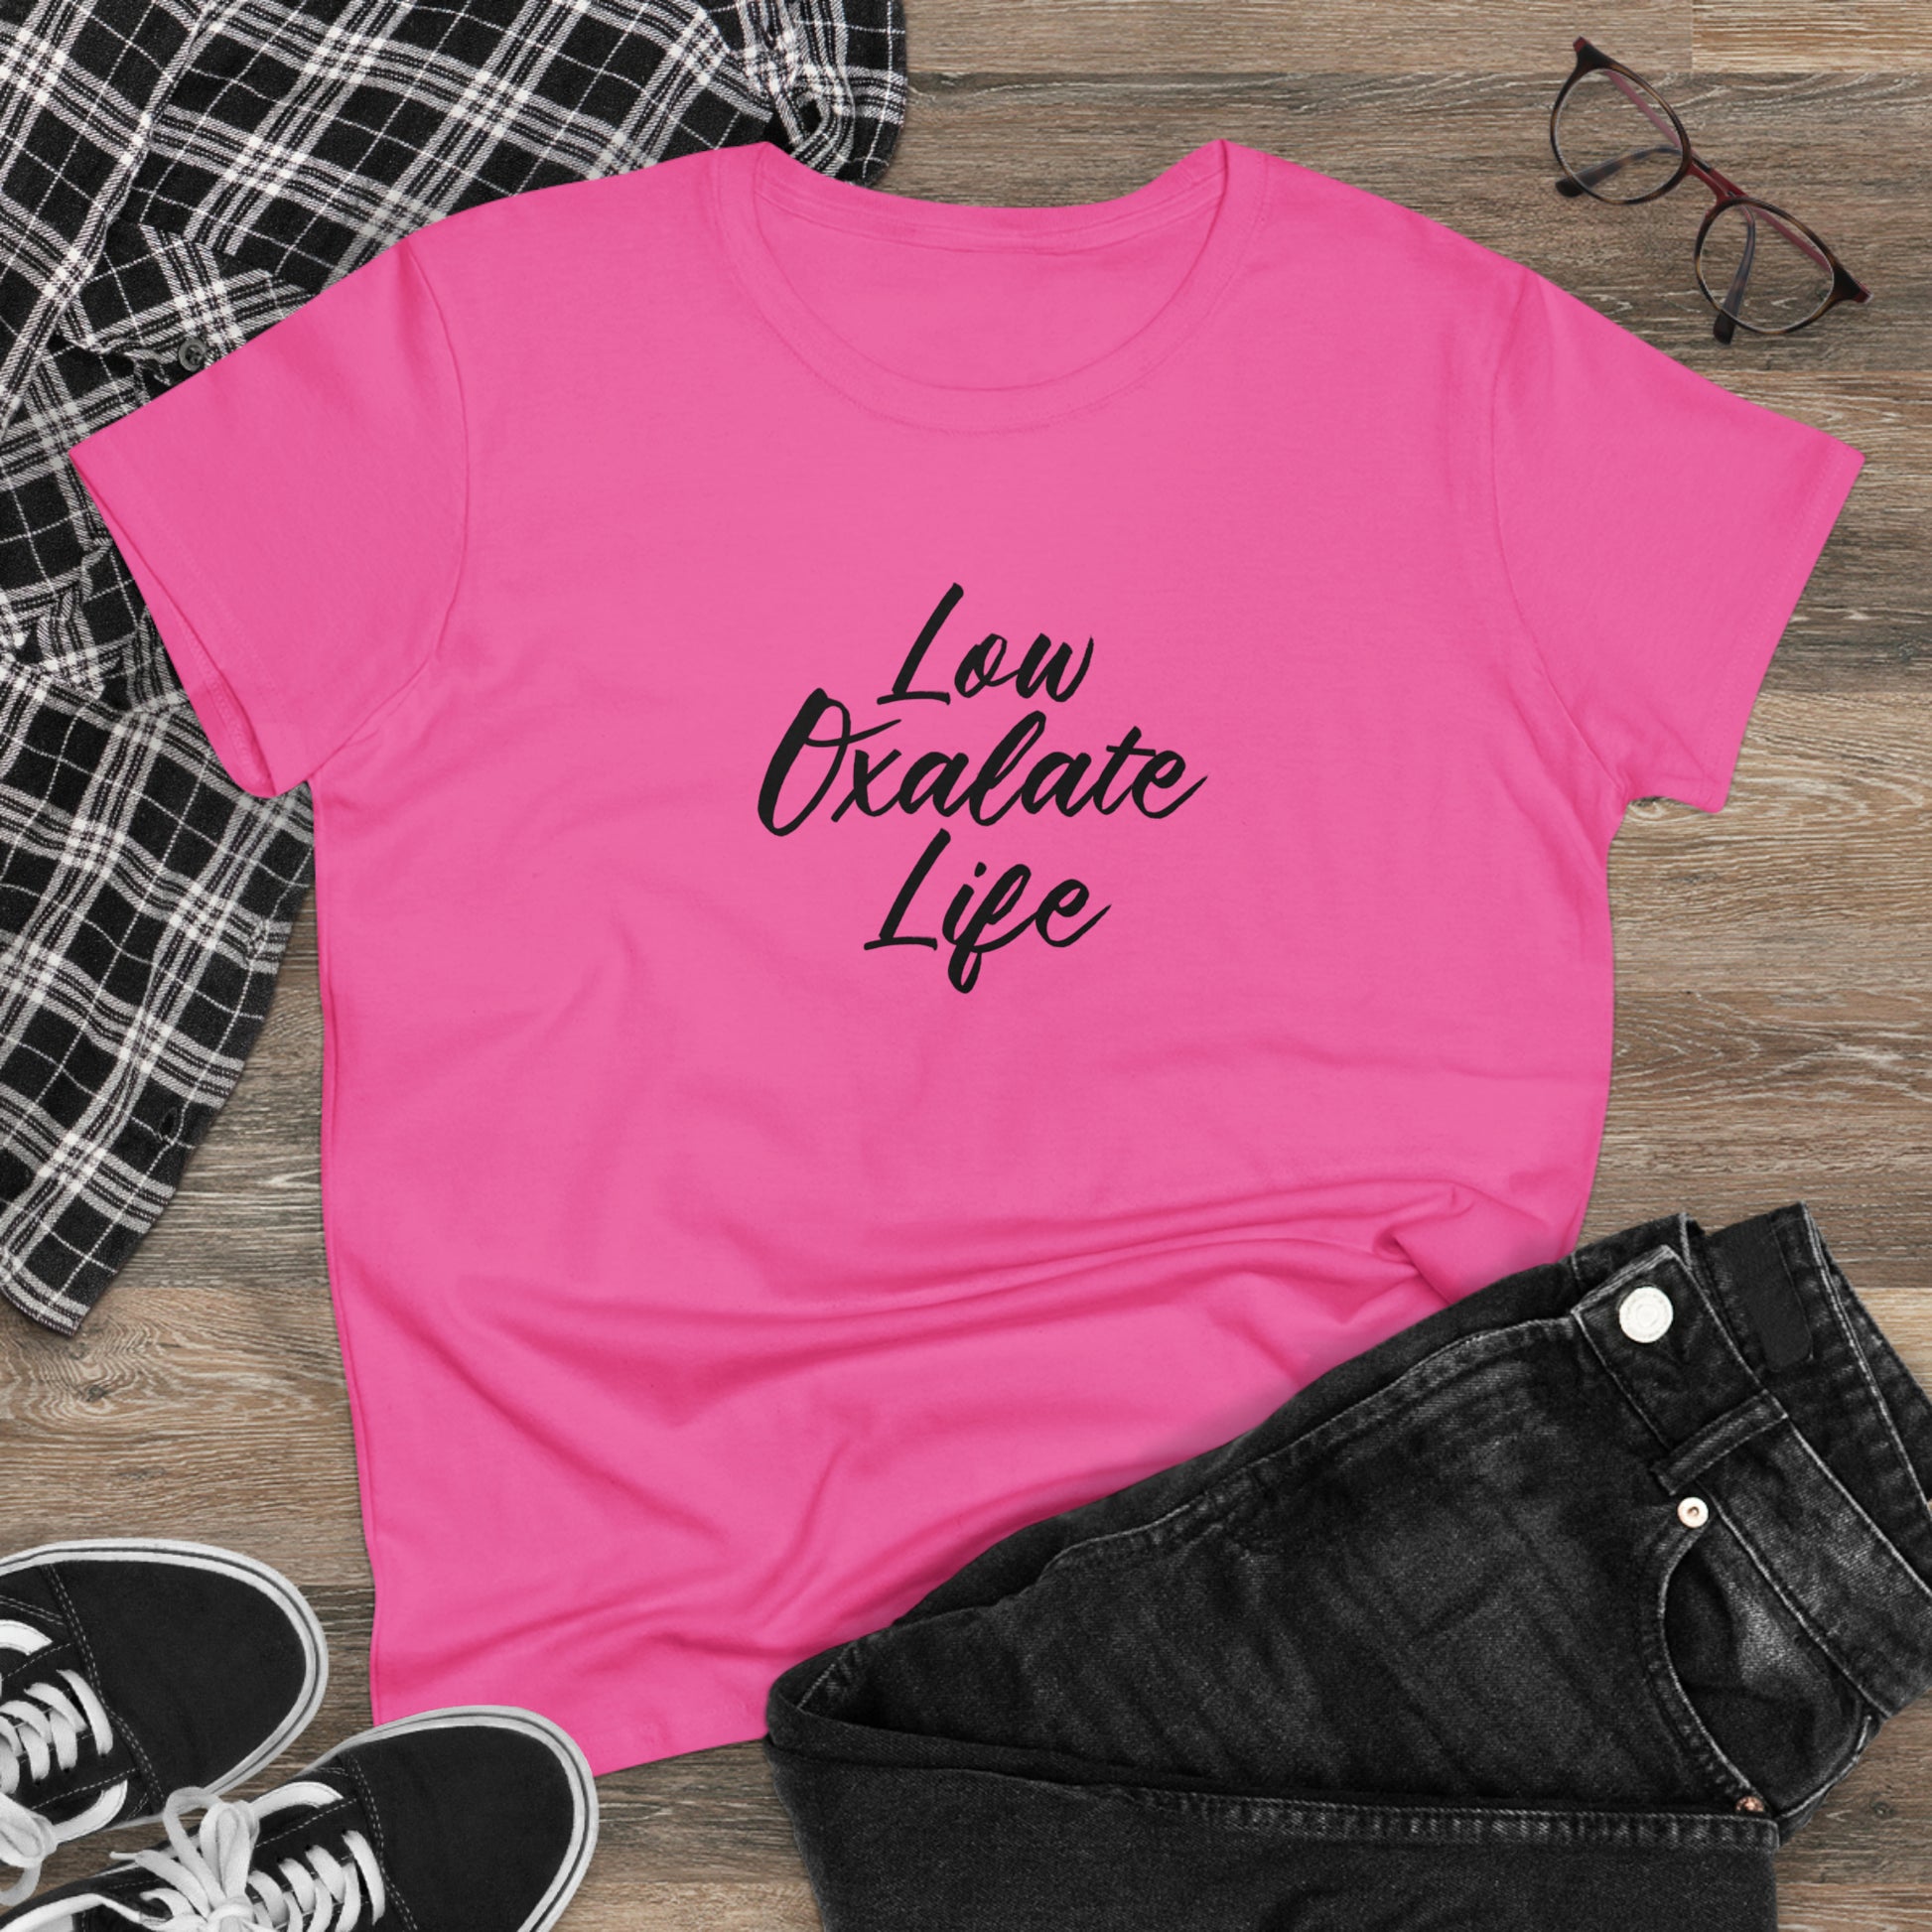 Low Oxalate Life Pink Shirt for Women Cotton T Shirt